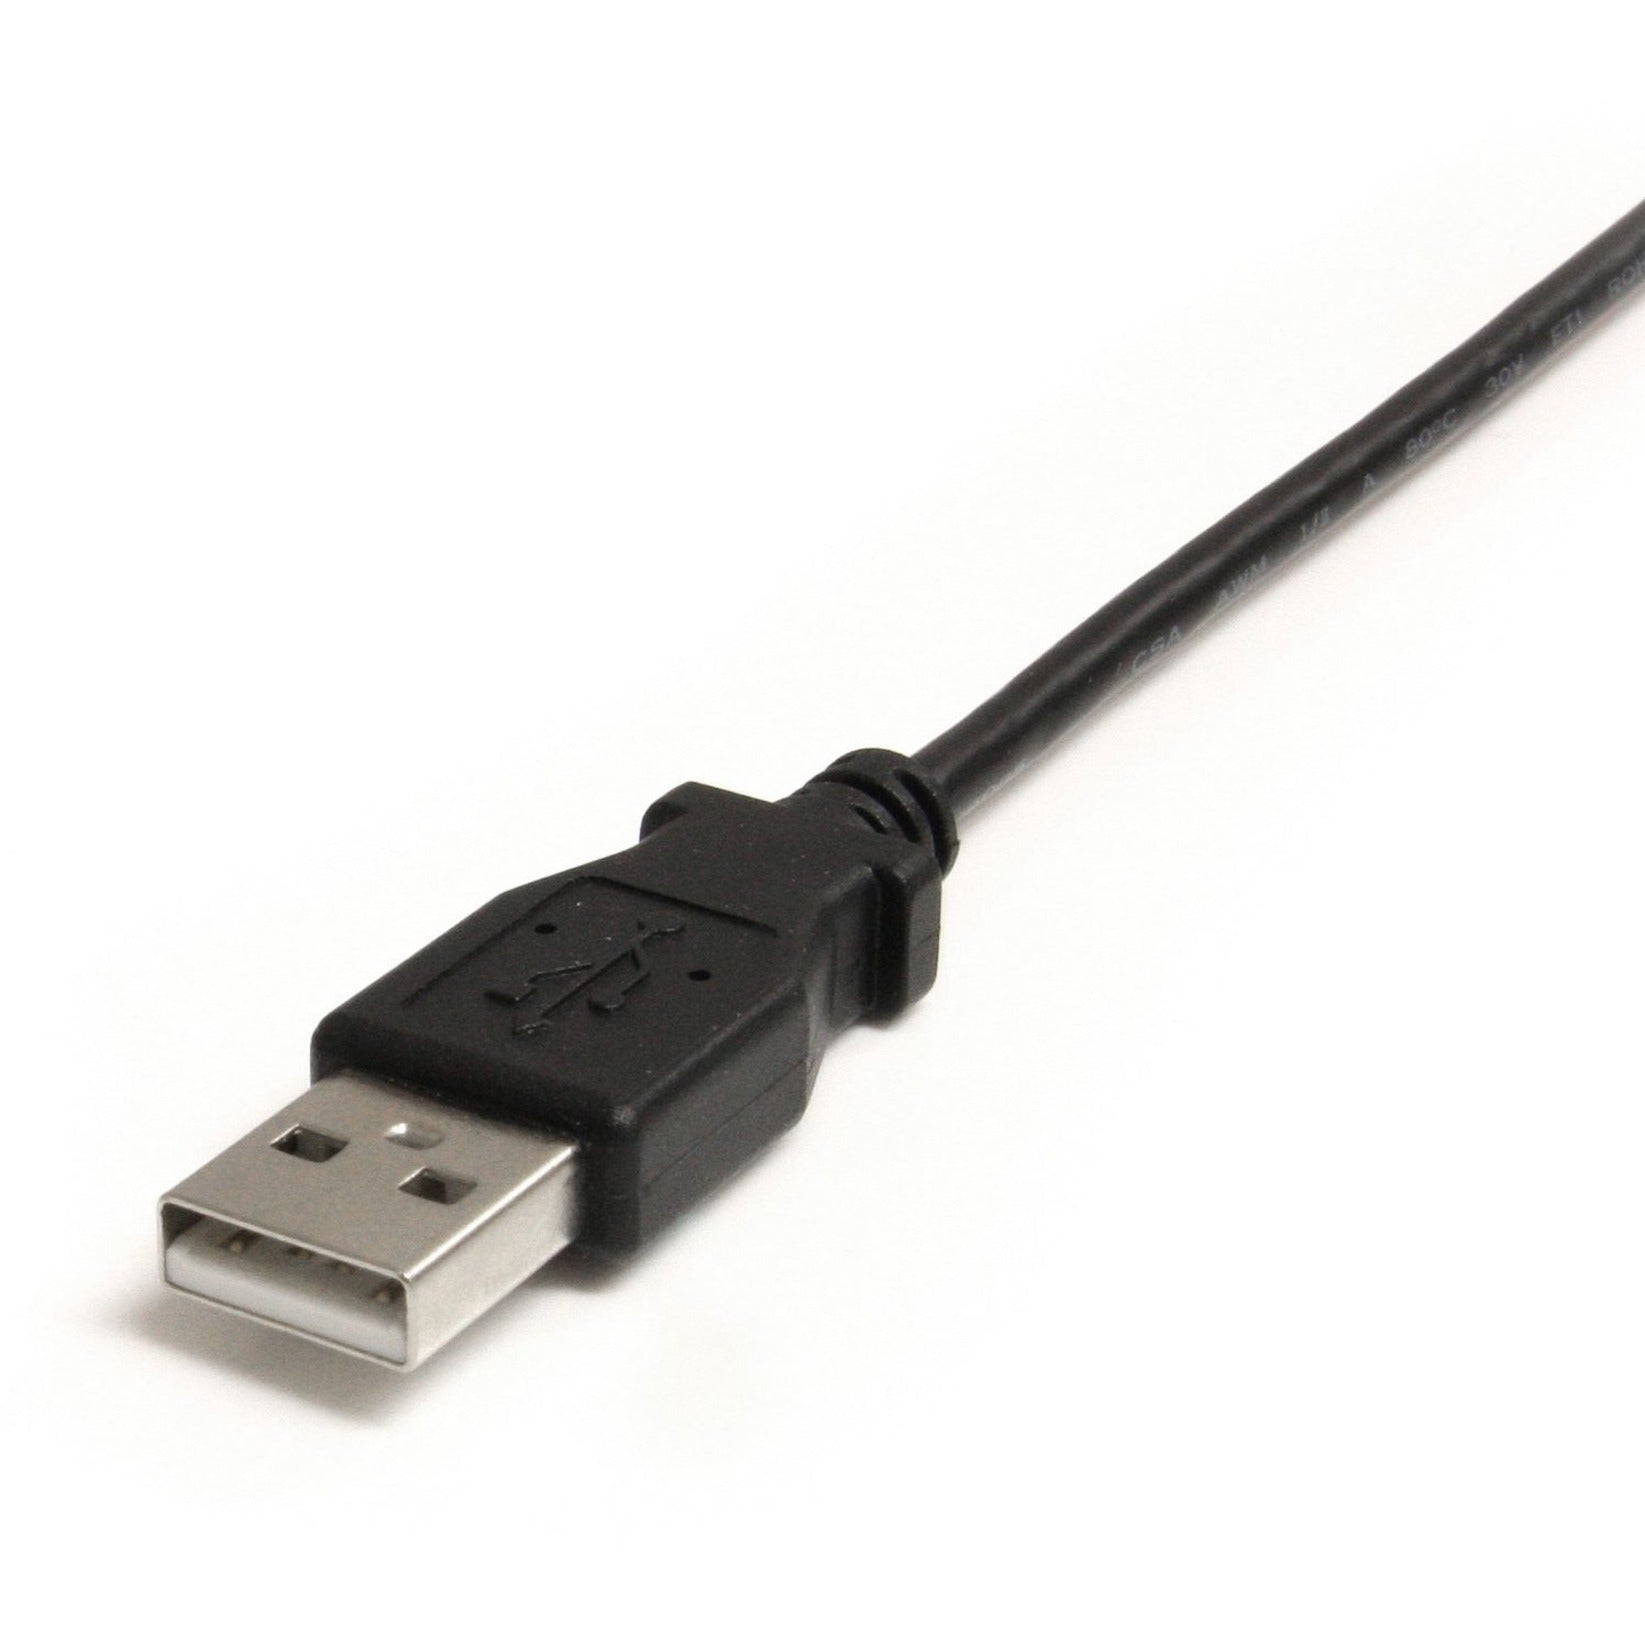 StarTech.com USB2HABM6RA 6 ft Mini USB Cable - A to Right Angle Mini B, Charging, Molded, 480 Mbit/s Data Transfer Rate